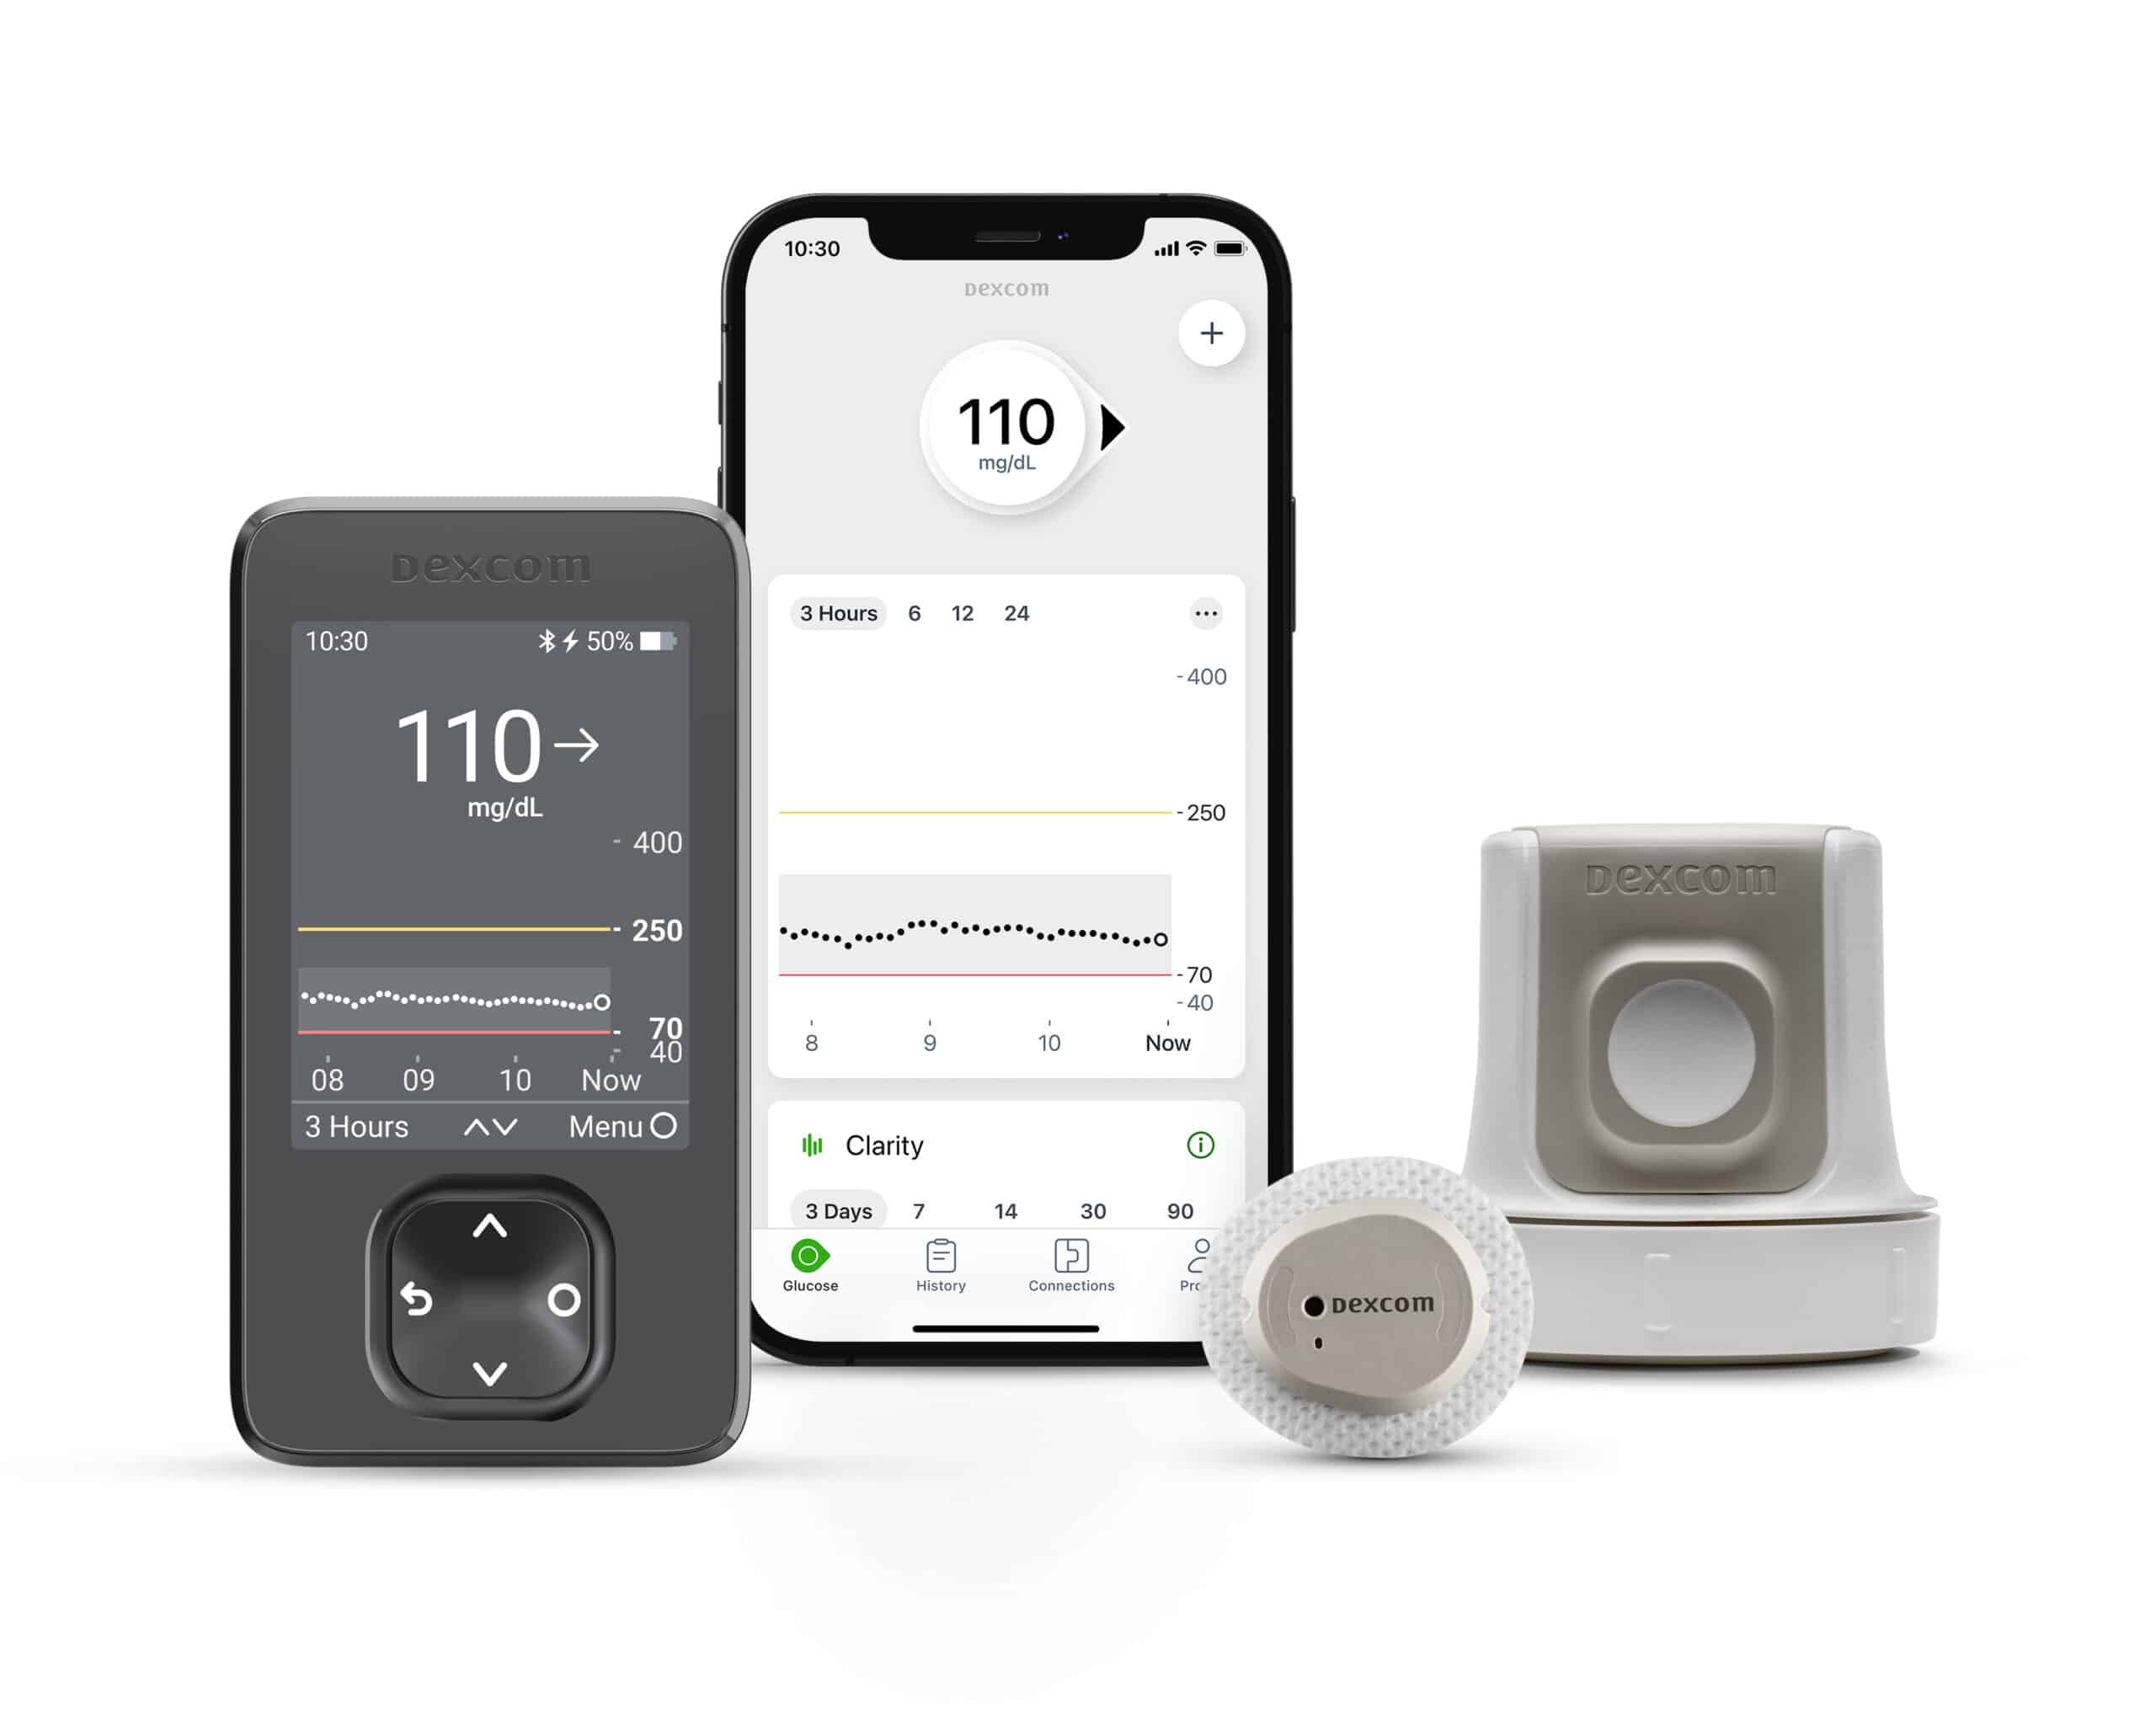 Dexcom G6 System Sensors Glucose Monitor